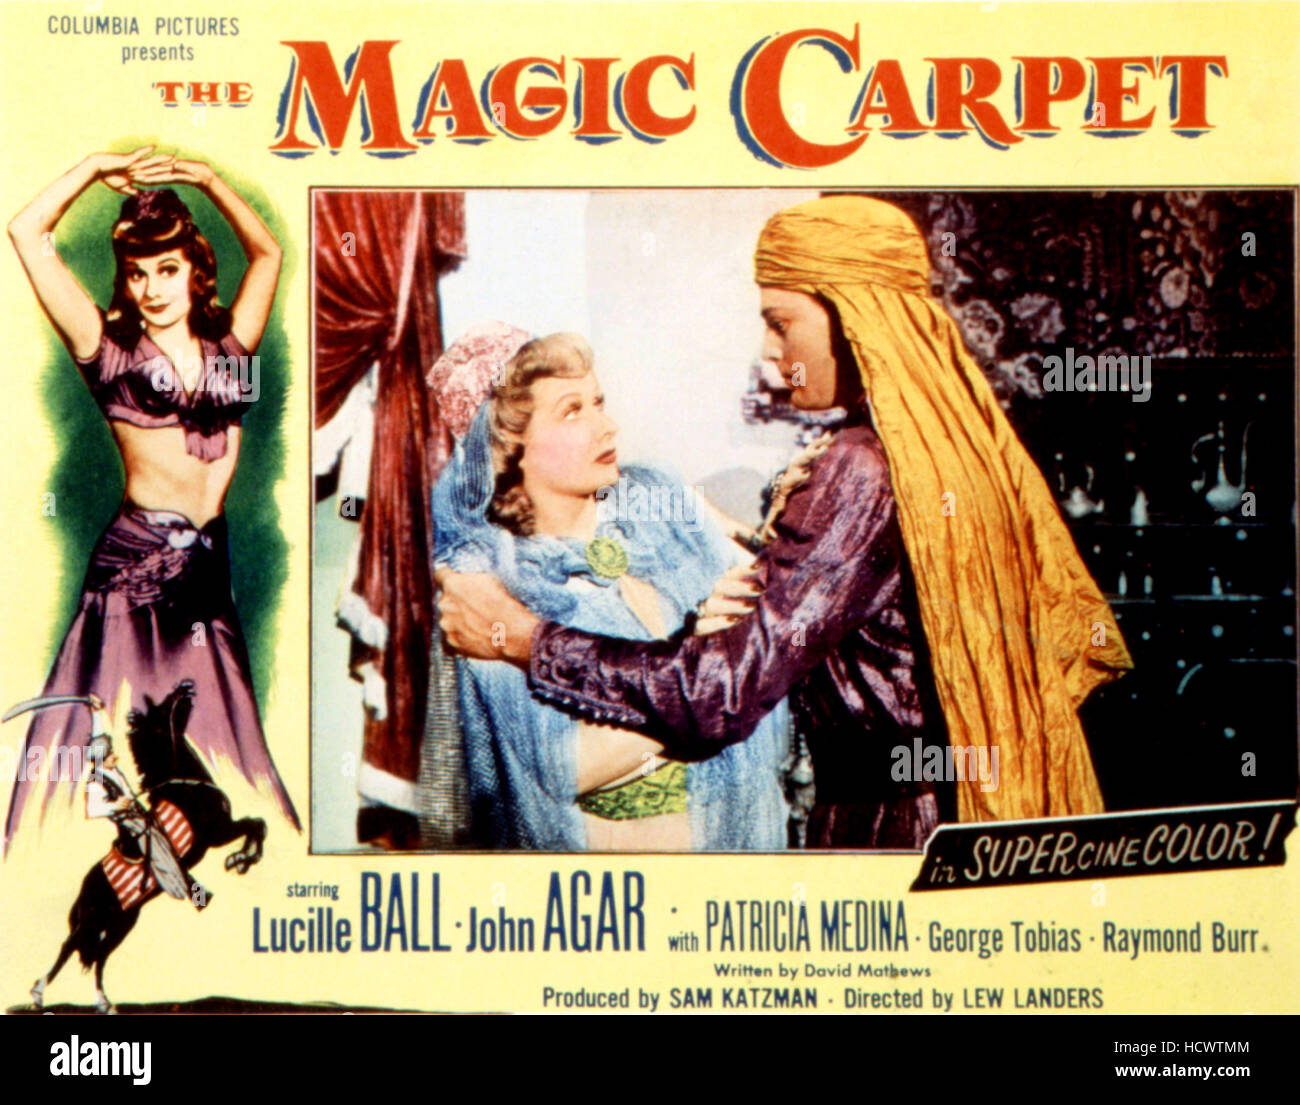 THE MAGIC CARPET, Lucille Ball, John Agar, 1951 Stock Photo - Alamy